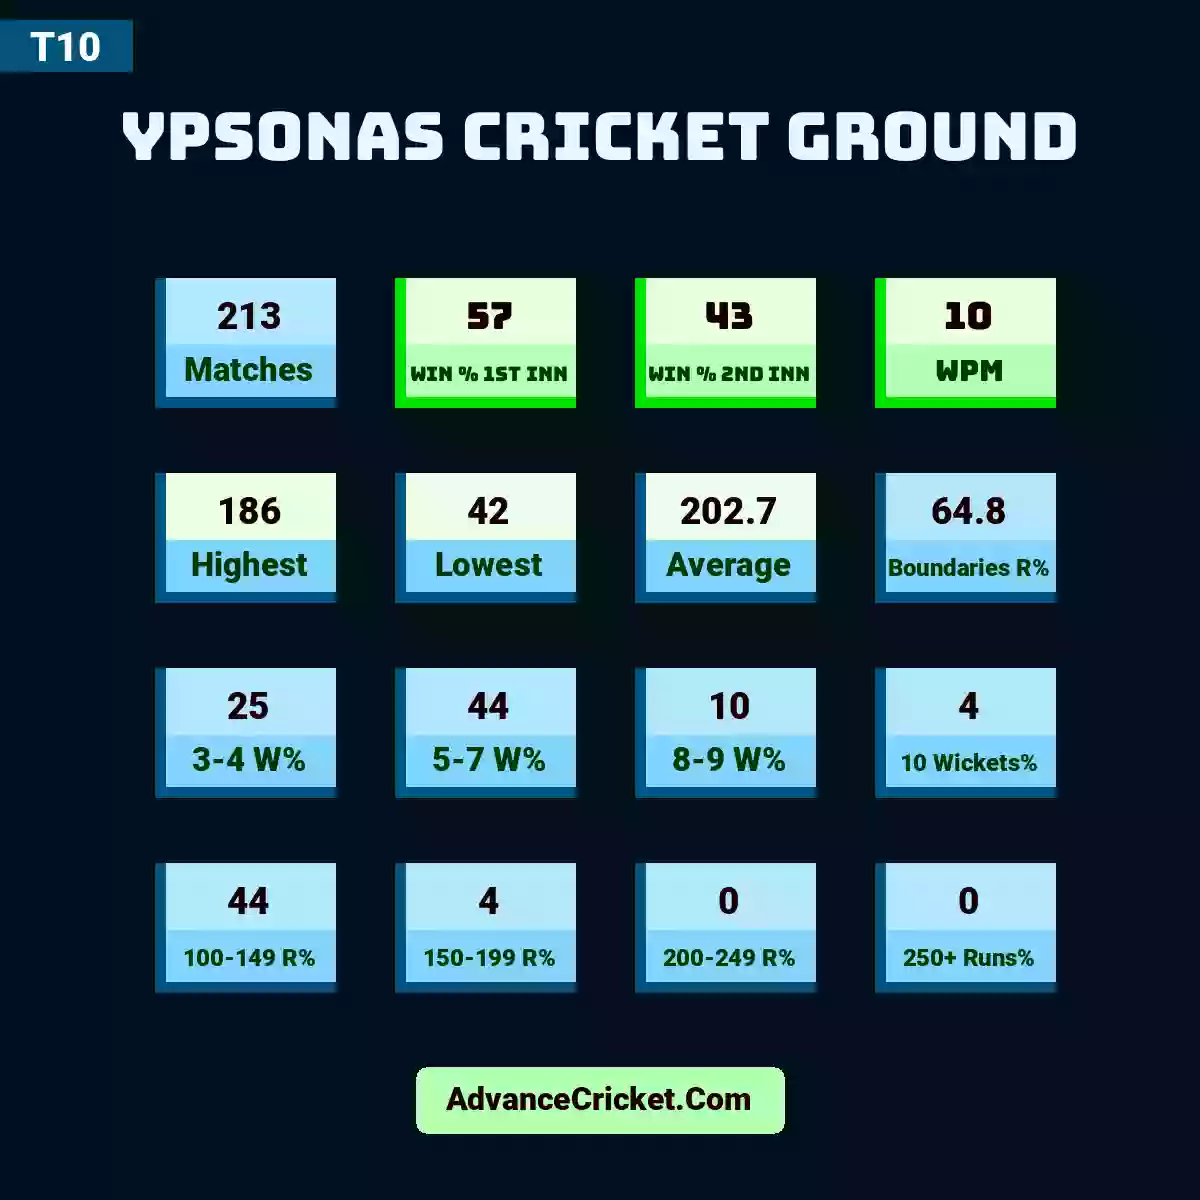 Image showing Ypsonas Cricket Ground with Matches: 213, Win % 1st Inn: 57, Win % 2nd Inn: 43, WPM: 10, Highest: 186, Lowest: 42, Average: 202.7, Boundaries R%: 64.8, 3-4 W%: 25, 5-7 W%: 44, 8-9 W%: 10, 10 Wickets%: 4, 100-149 R%: 44, 150-199 R%: 4, 200-249 R%: 0, 250+ Runs%: 0.